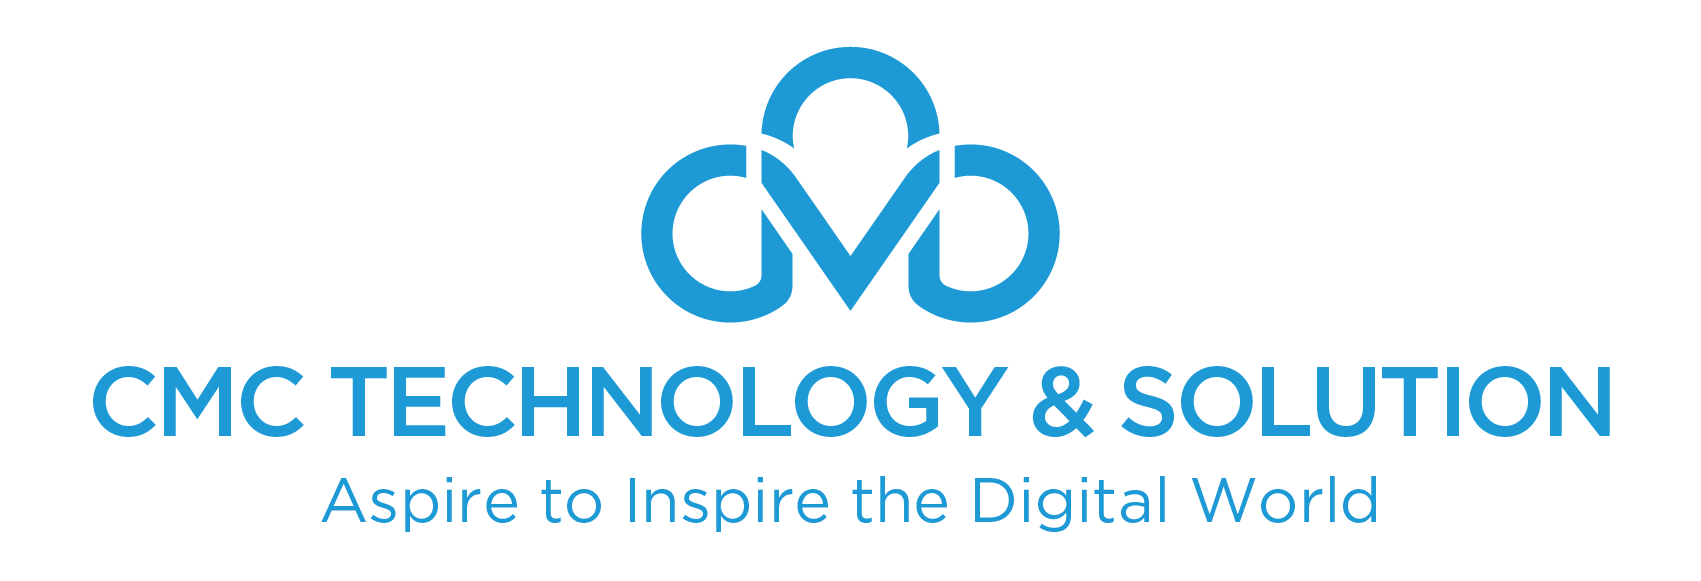 CMC Technology & Solution